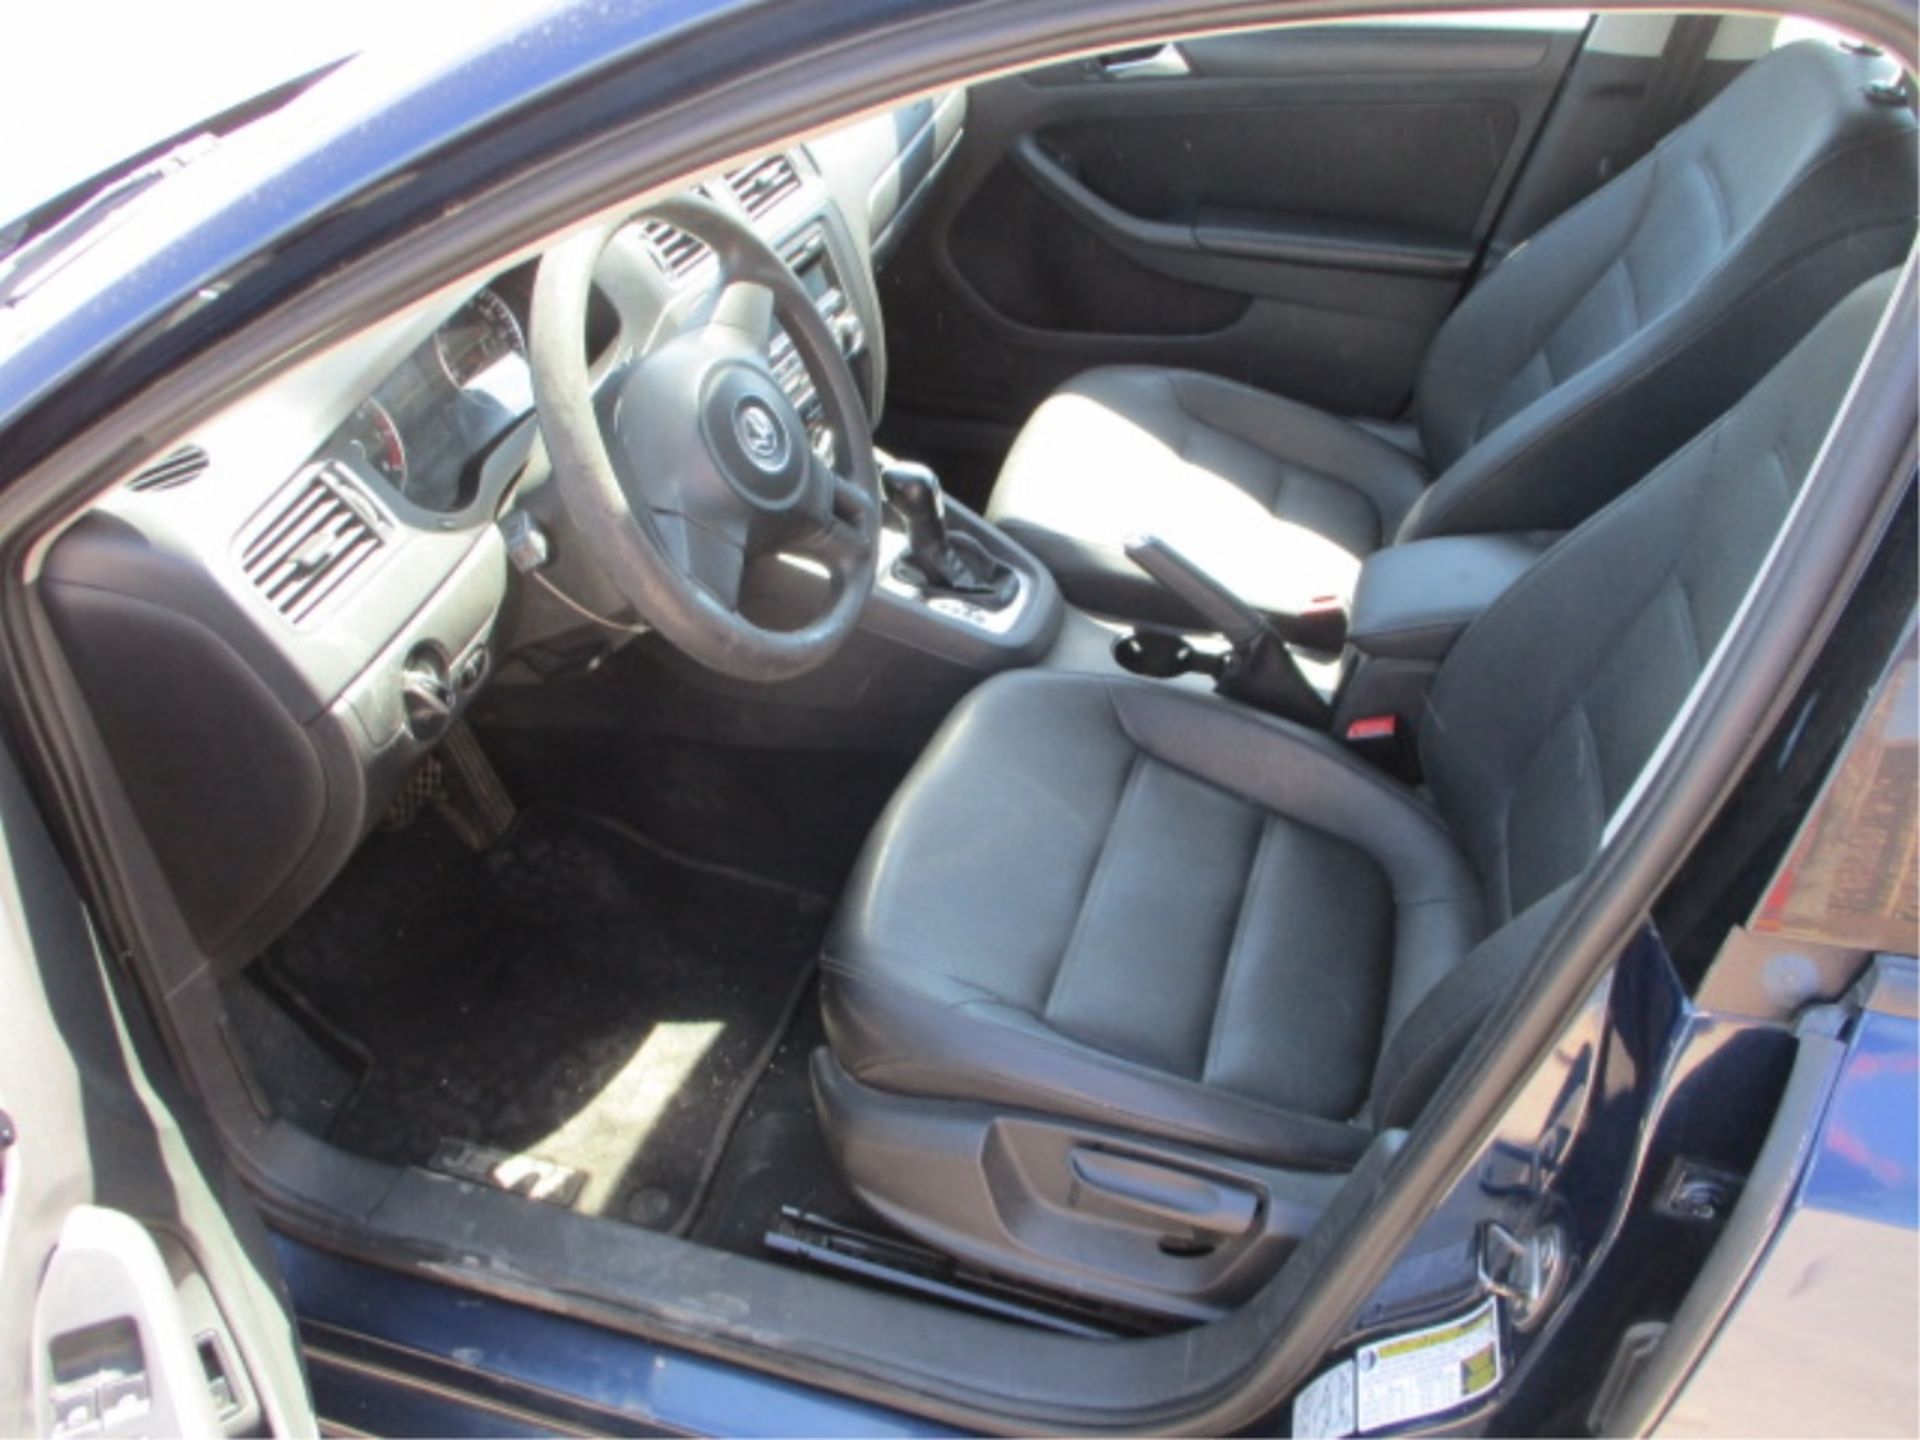 2012 Volkswagen Jetta Sedan, 2.5L Gas, Automatic, S/N: 3VWDP7AJ6CM345626, Mile/Hours - 82277 - Image 20 of 40